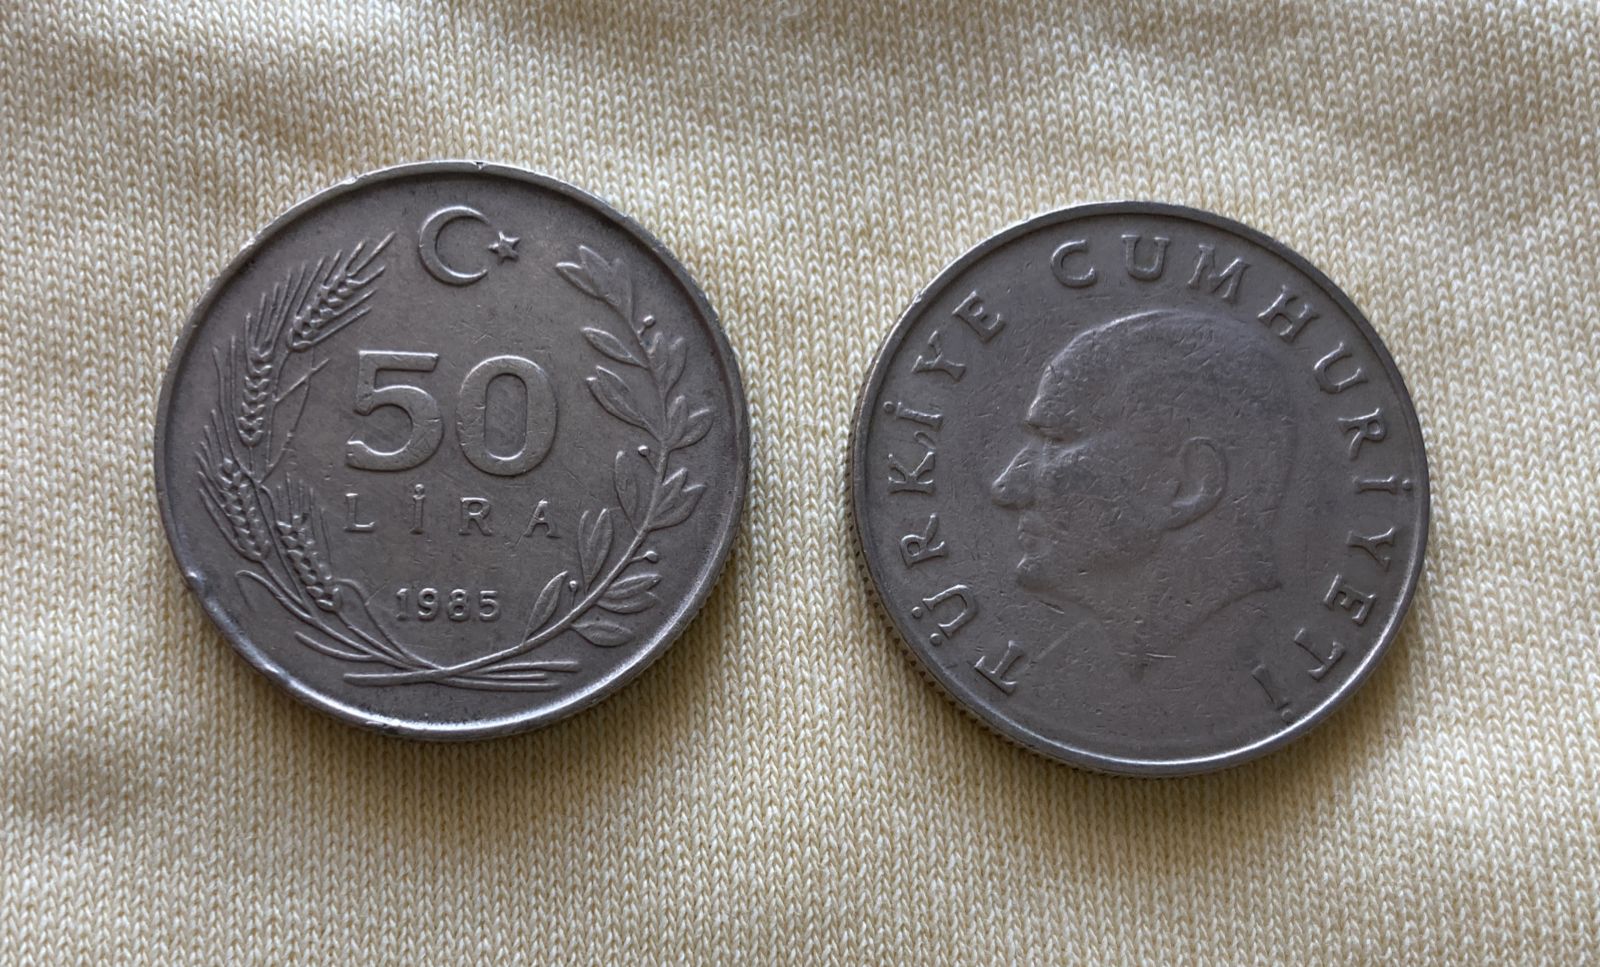 1985 Madeni Para 50 Lira